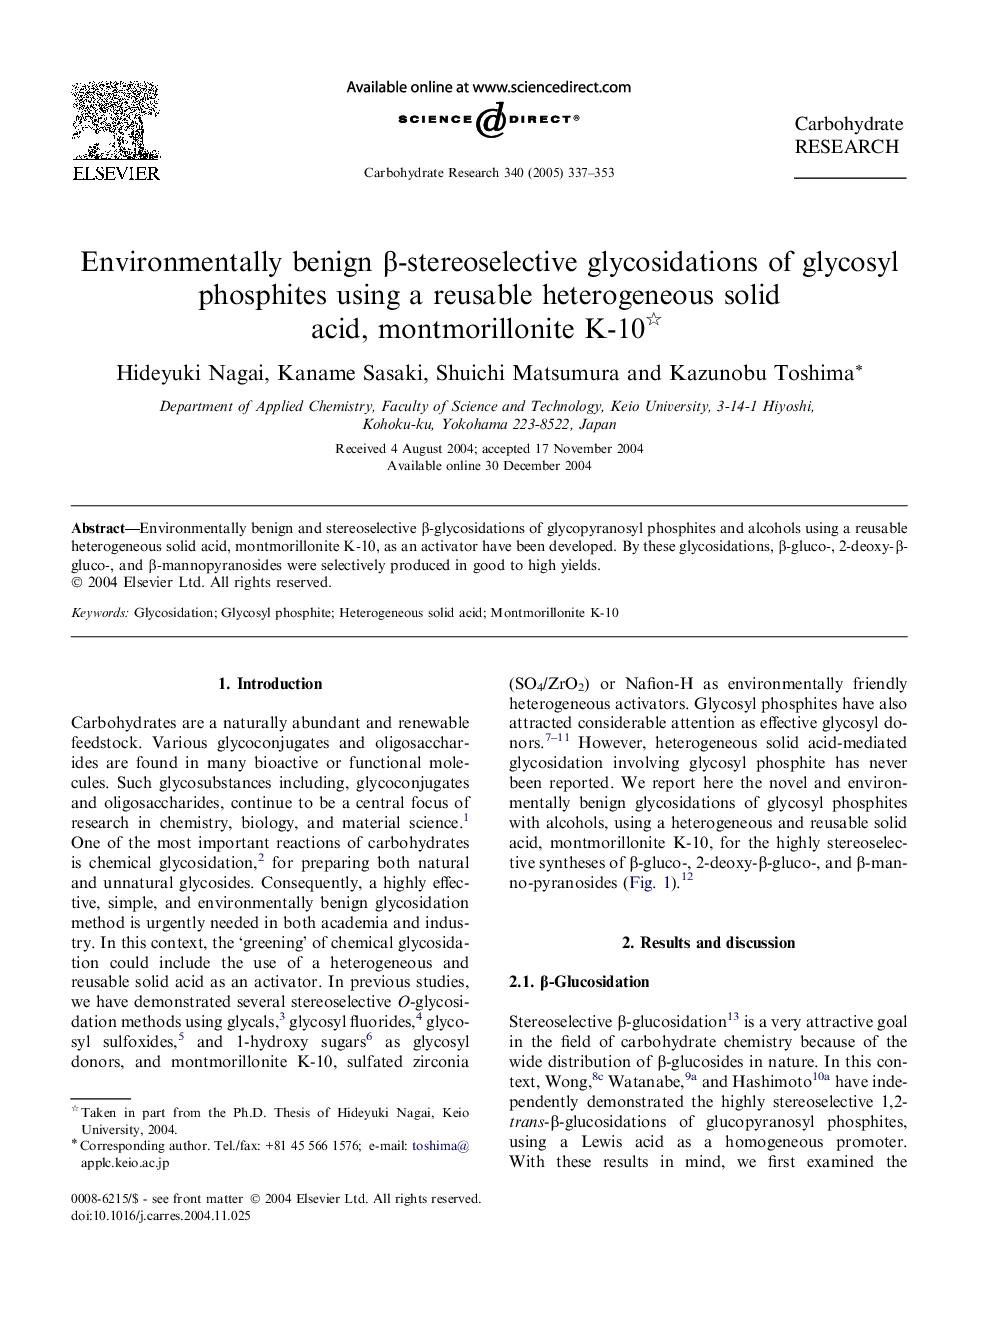 Environmentally benign Î²-stereoselective glycosidations of glycosyl phosphites using a reusable heterogeneous solid acid, montmorillonite K-10